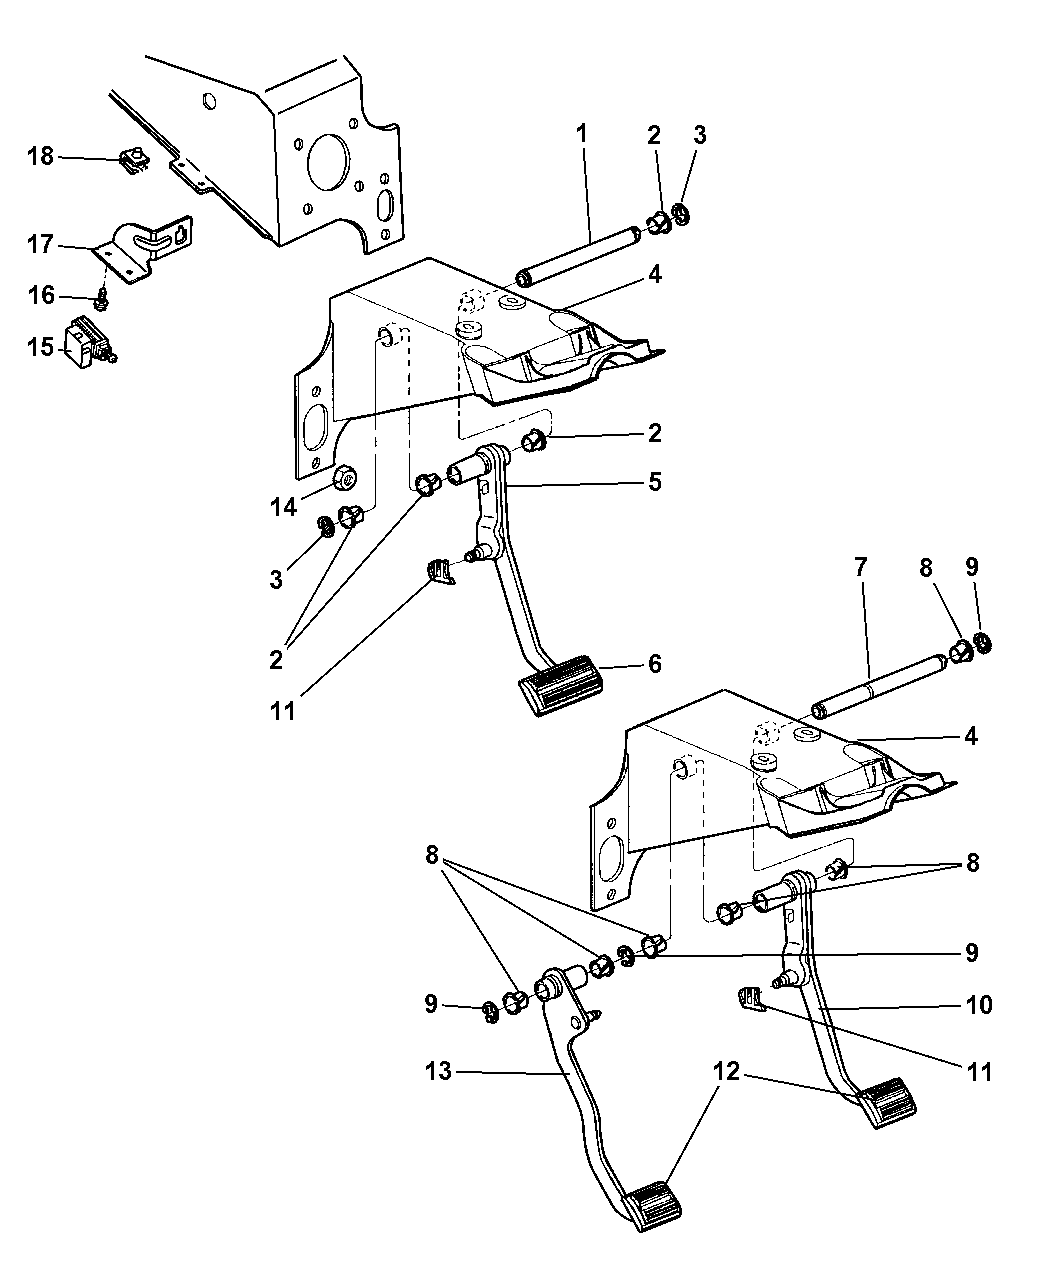 4779027 - Genuine Mopar PEDAL-PEDAL 2001 dodge dakota brake pedal wiring diagram 